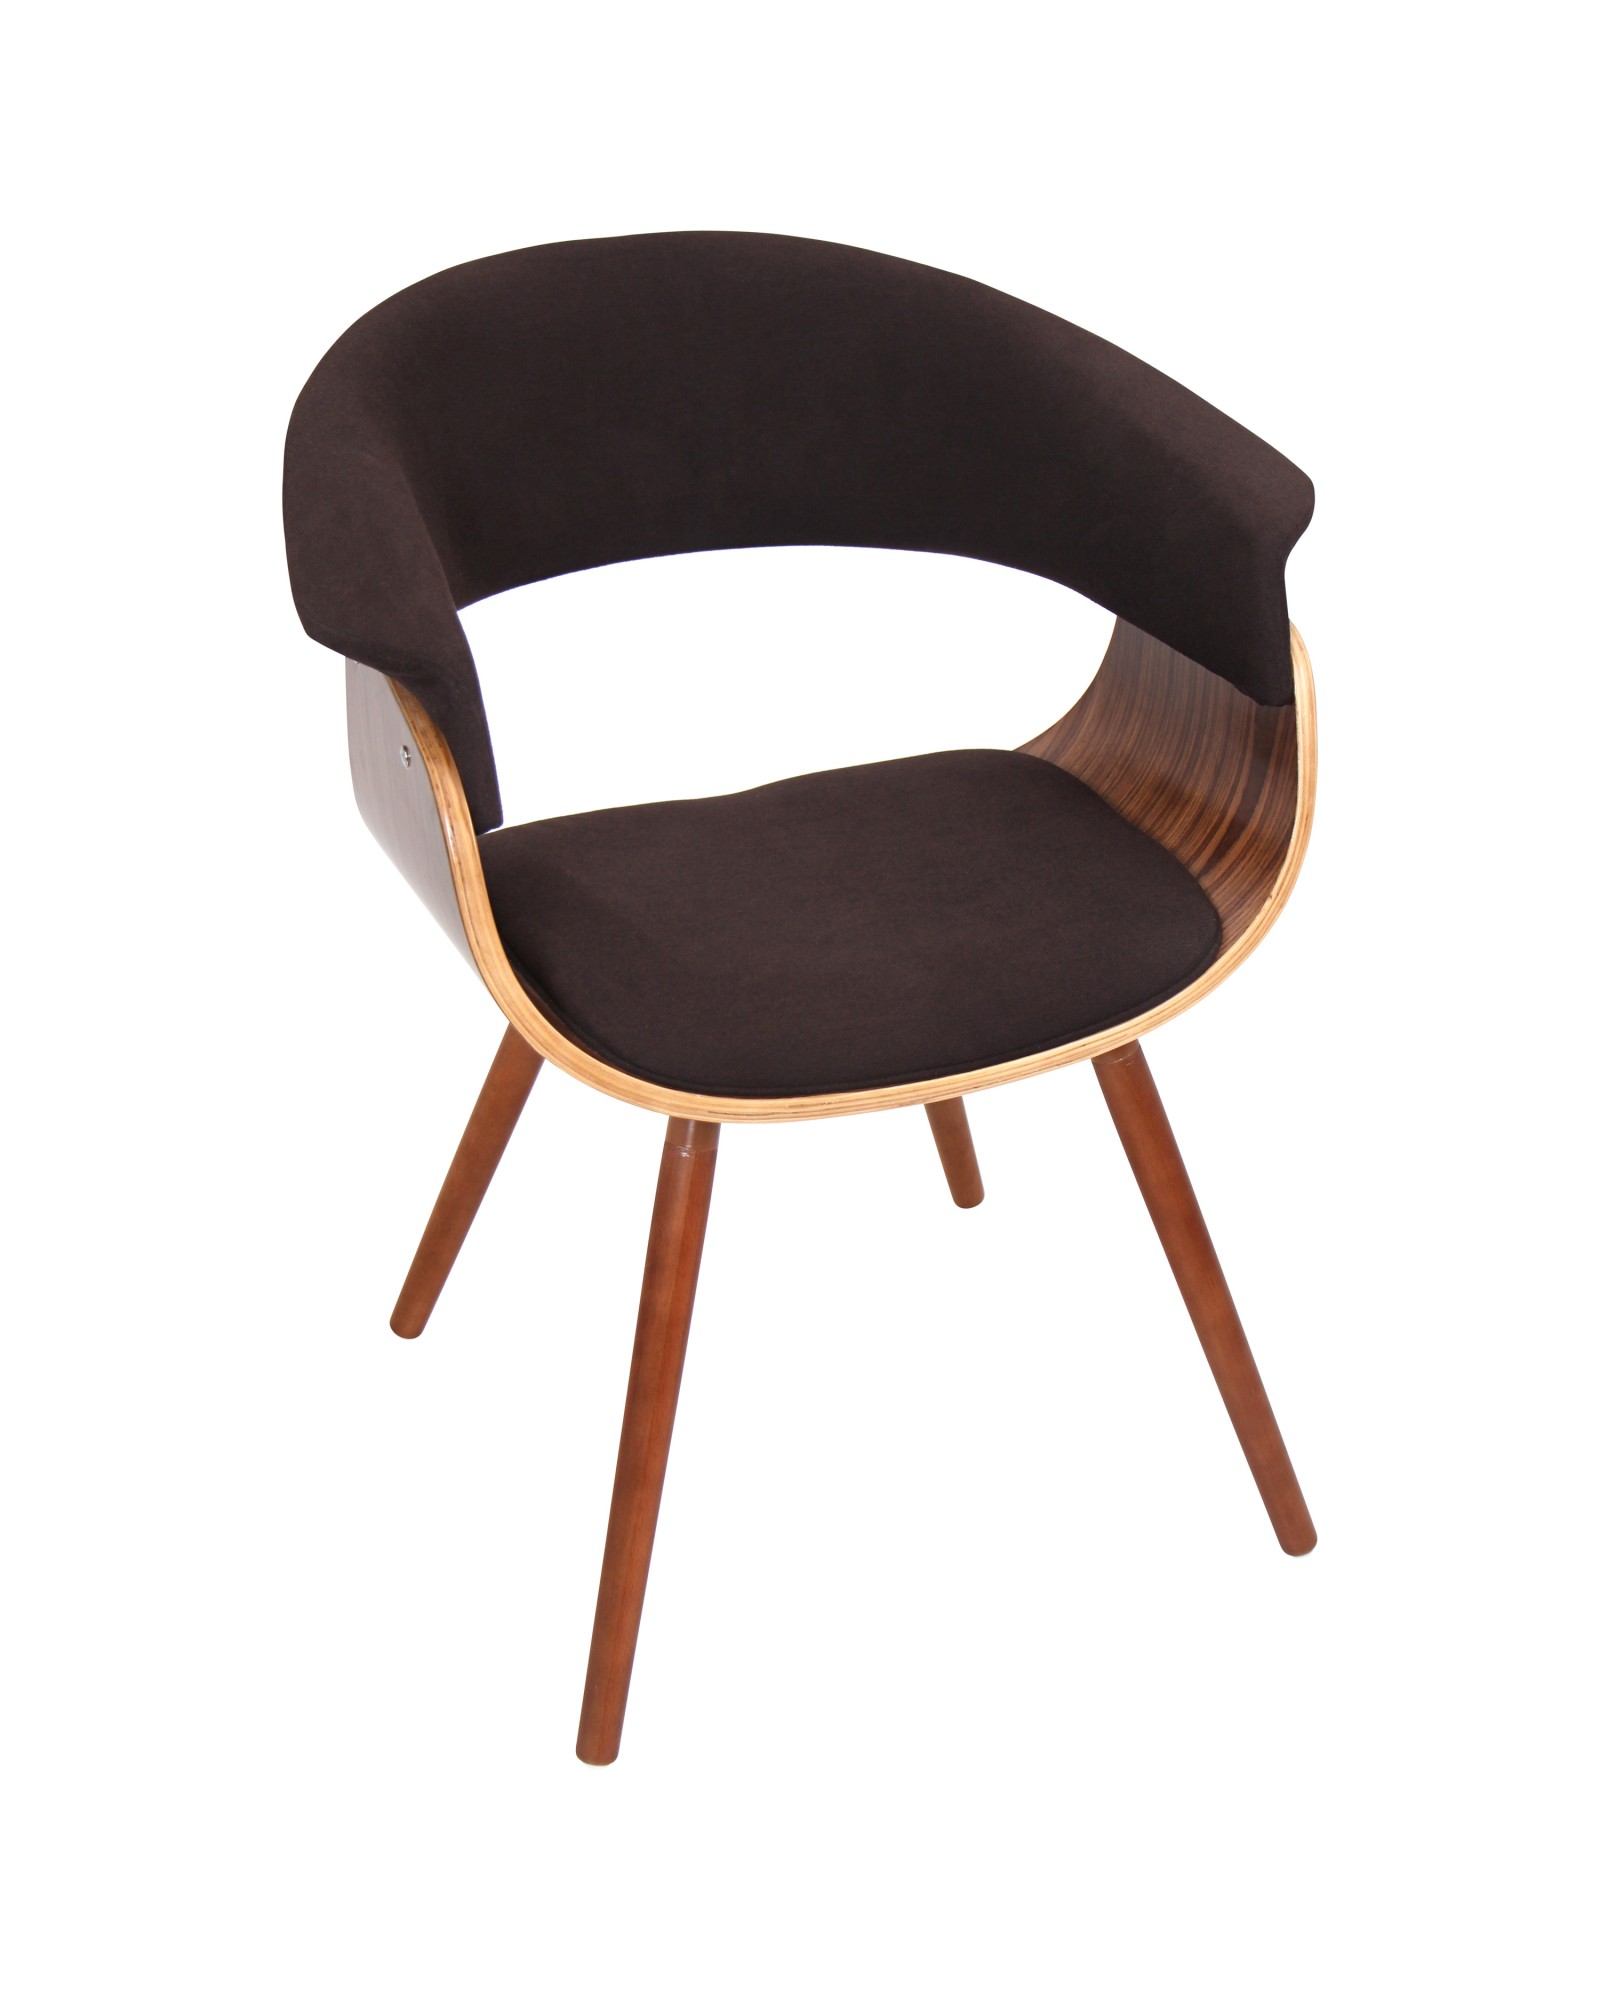 Vintage Mod Mid-century Modern Chair in Walnut and Espresso Fabric